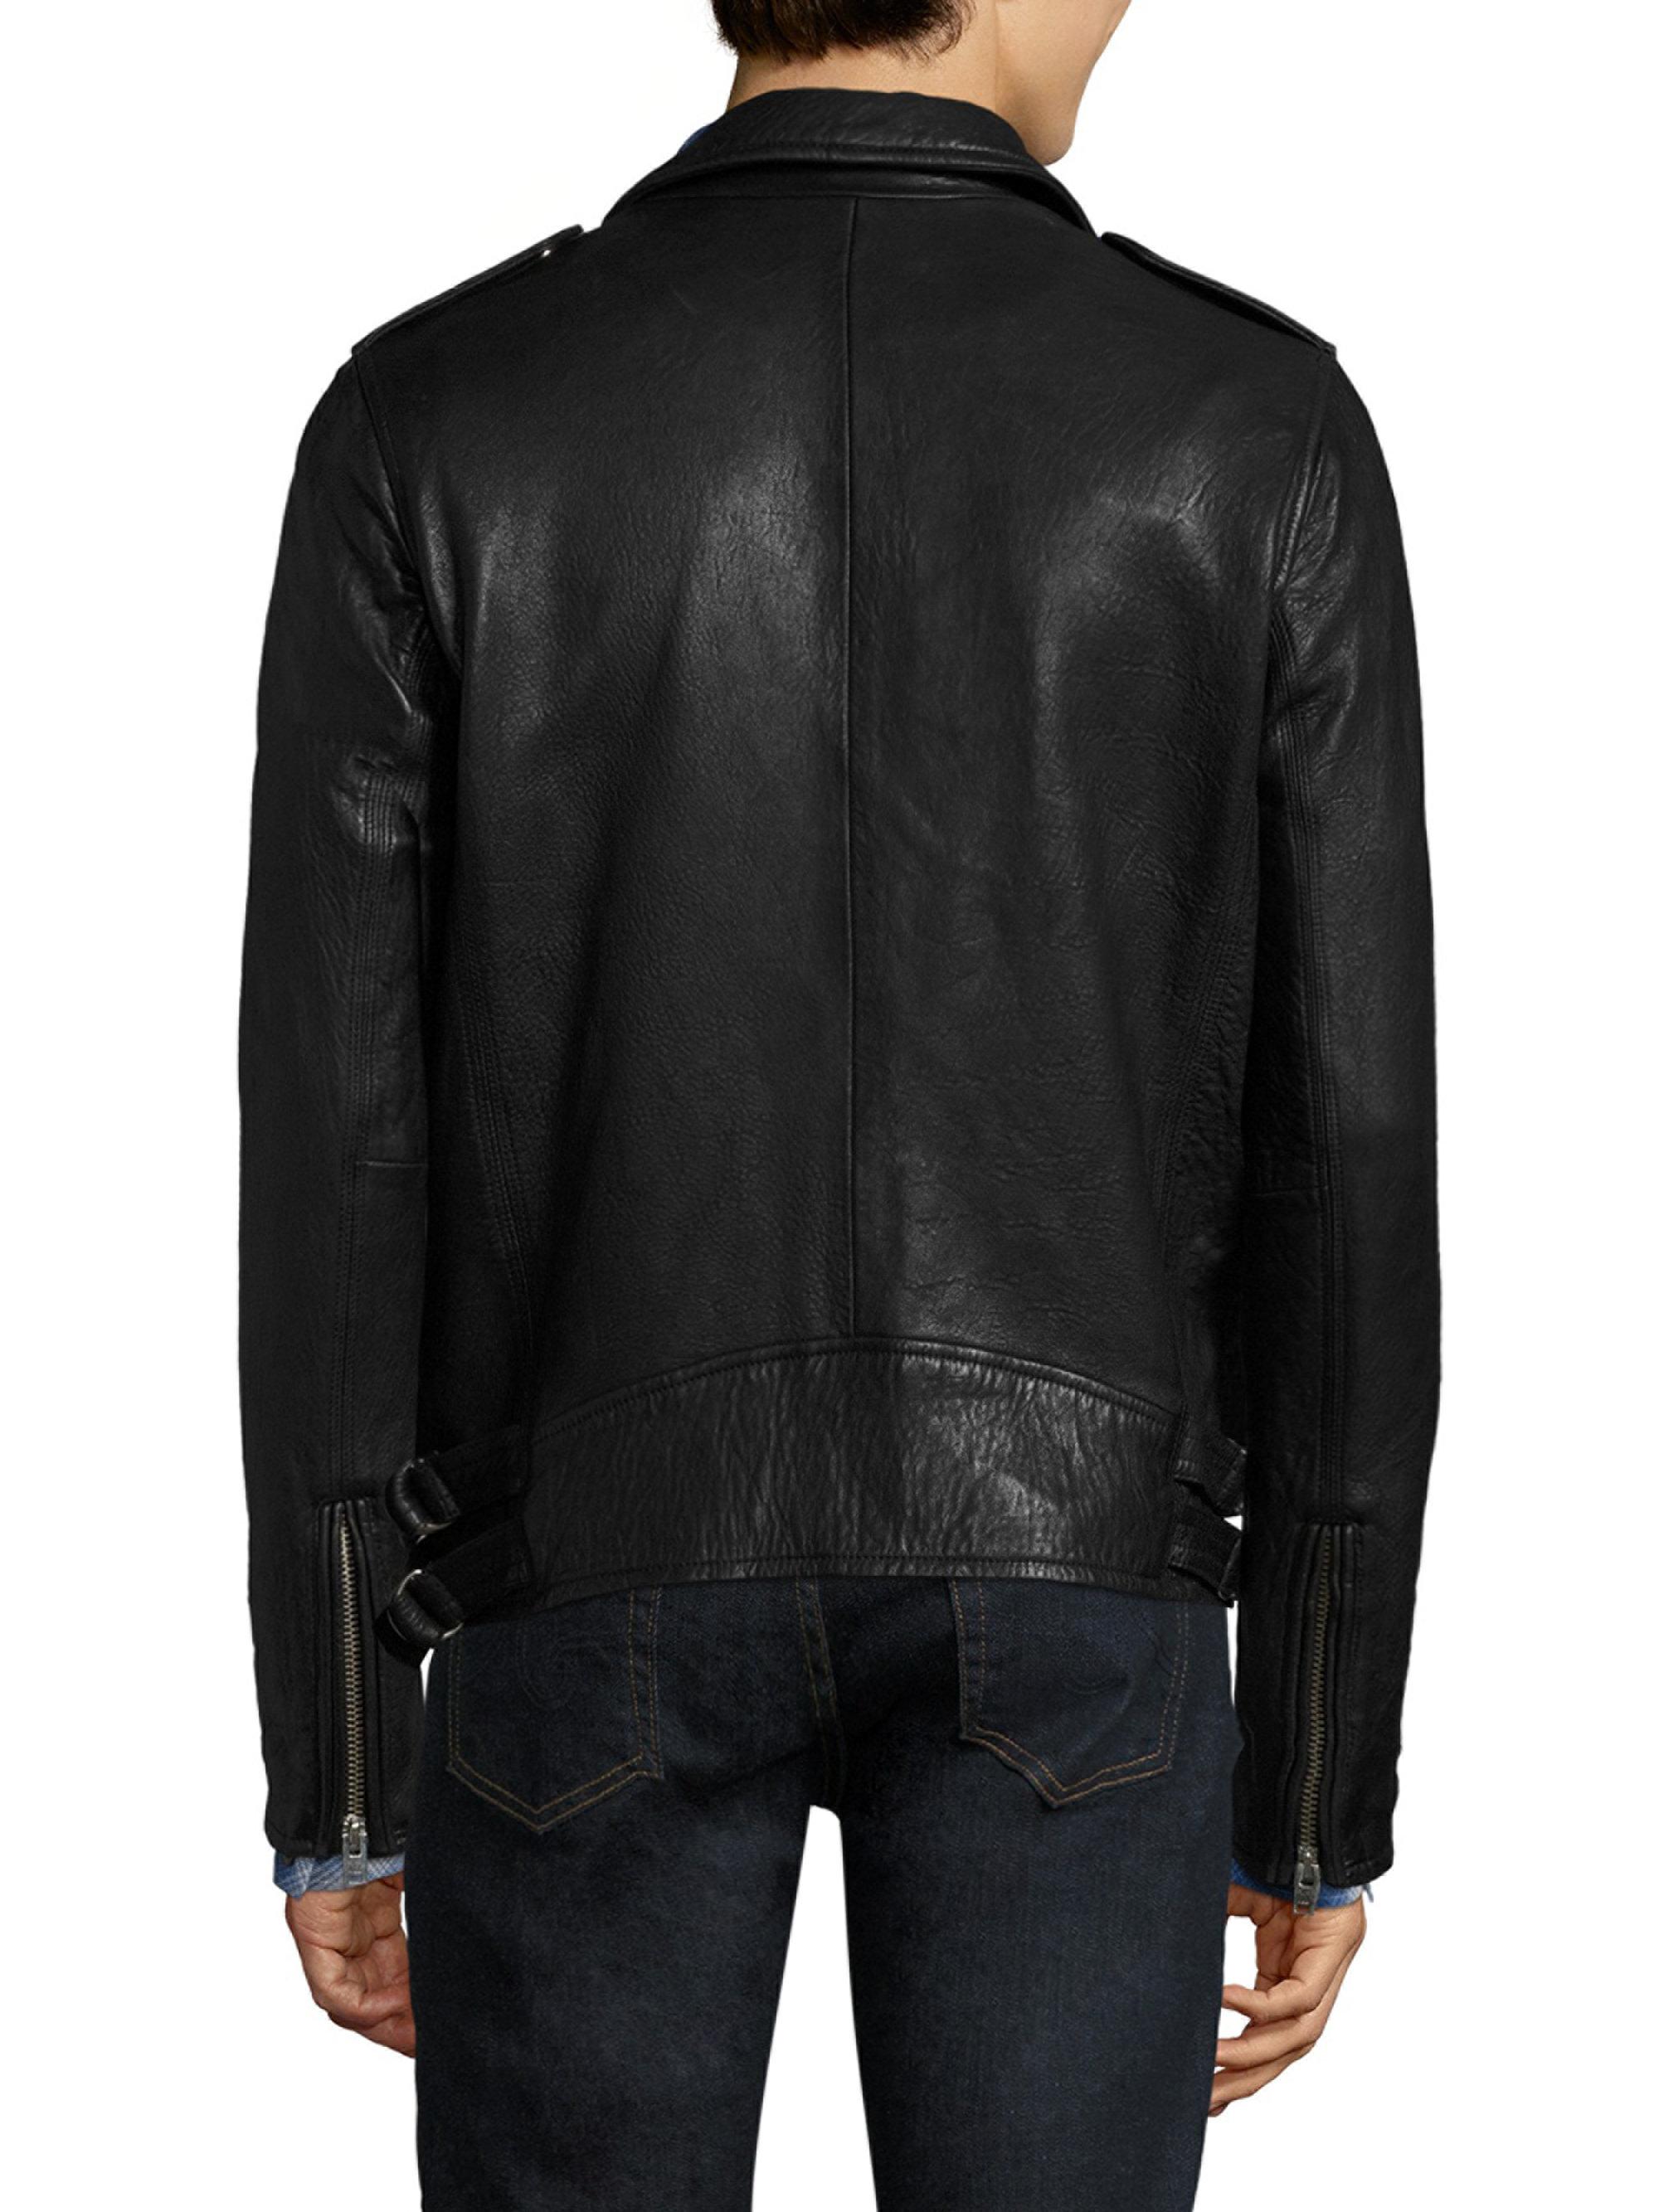 Lyst - IRO Zip Front Lambskin Leather Jacket in Black for Men